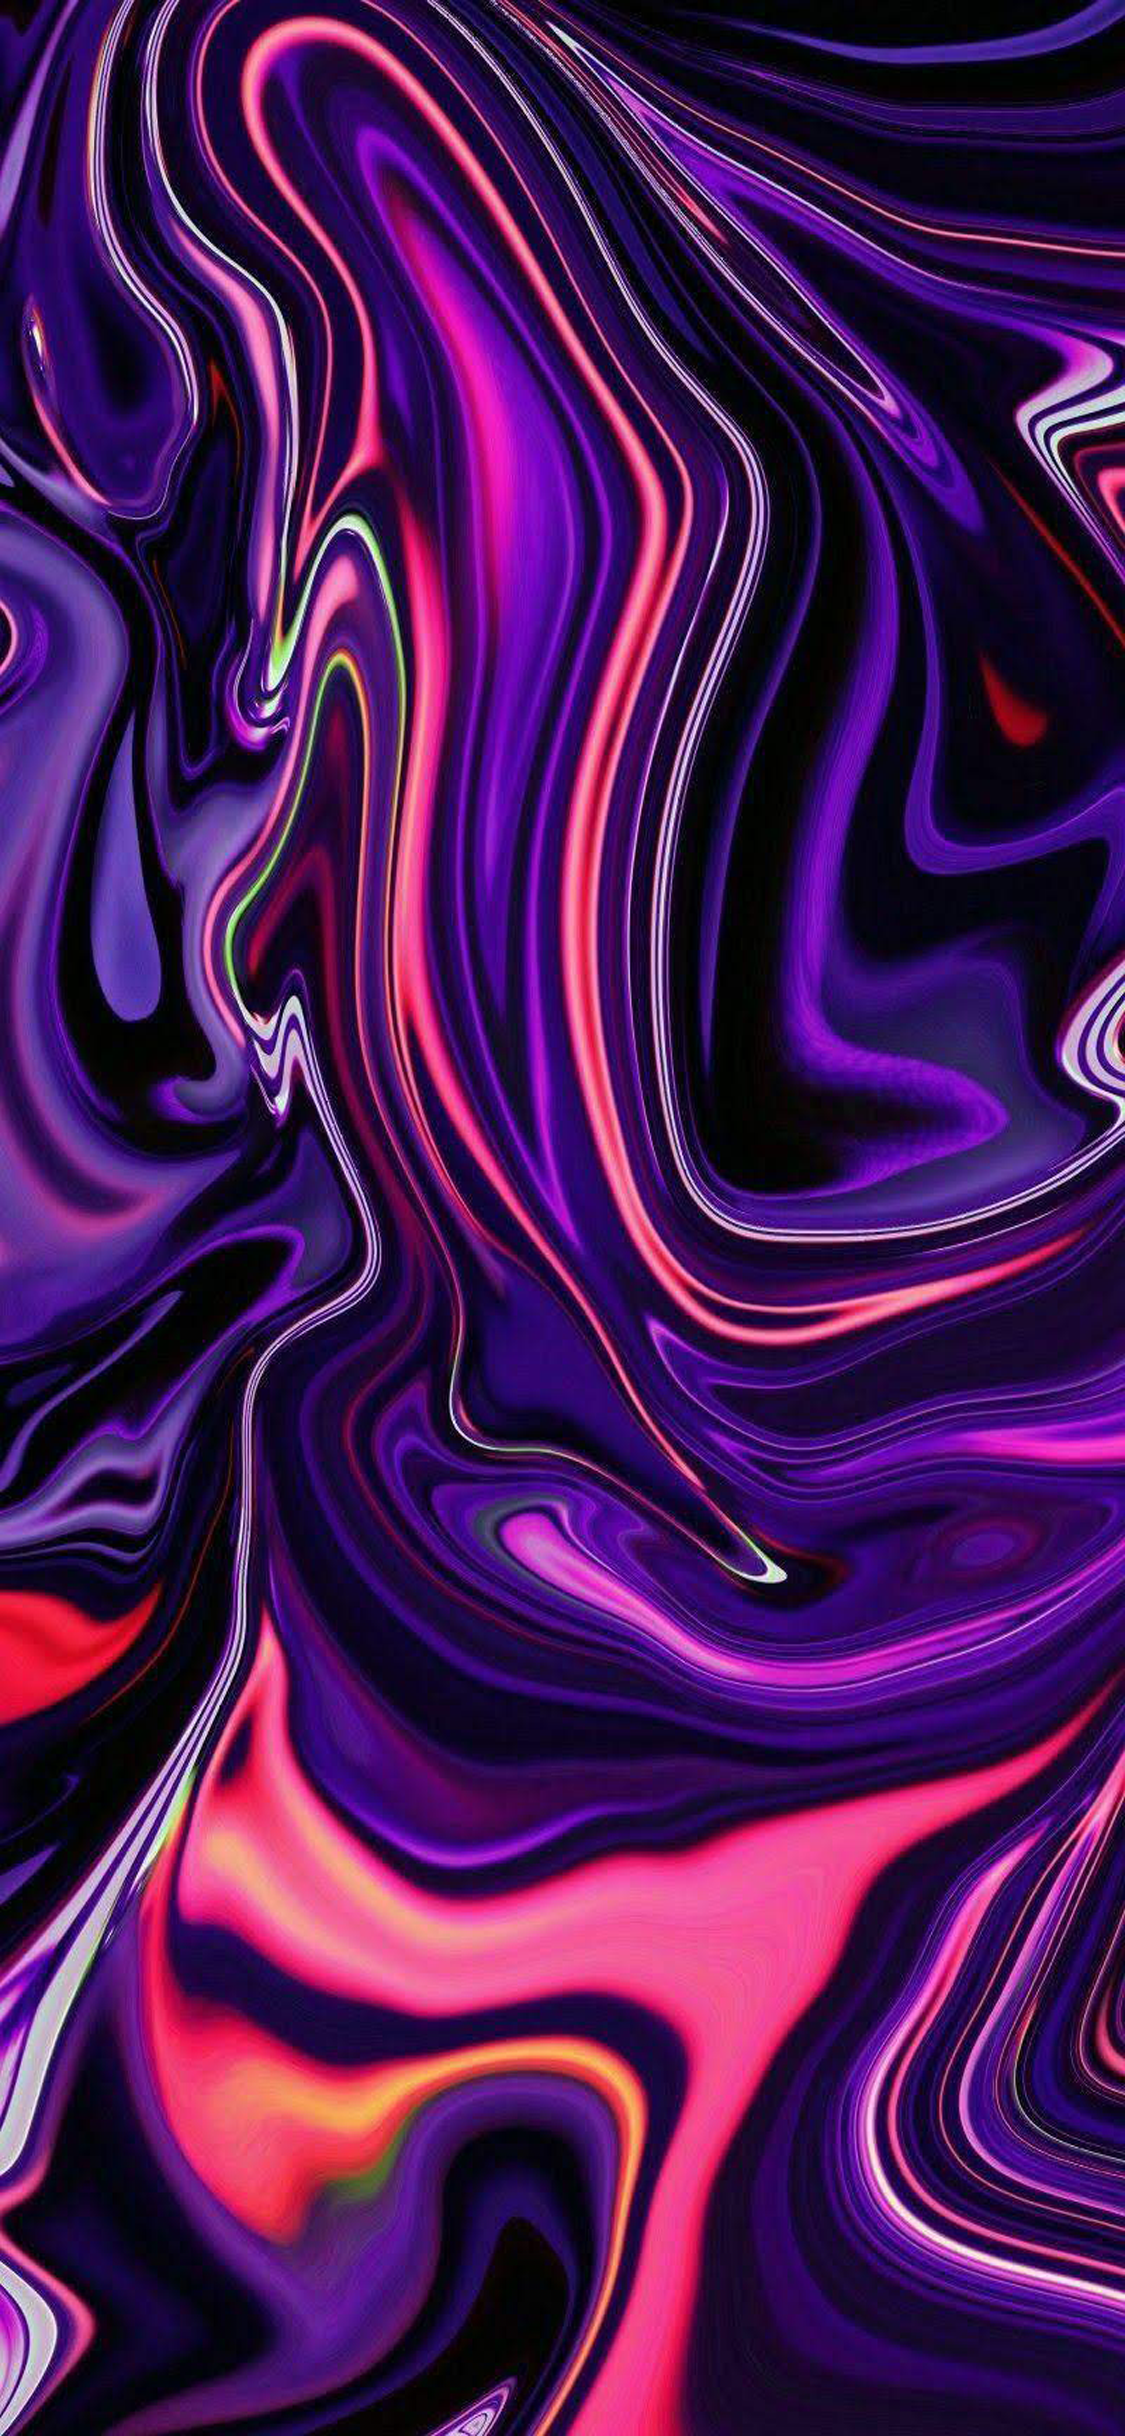  IPhone 11 Pro Hintergrundbild 1125x2436. iPhone 11 Pro Wallpaper. Holographic wallpaper, Trippy wallpaper, Abstract wallpaper